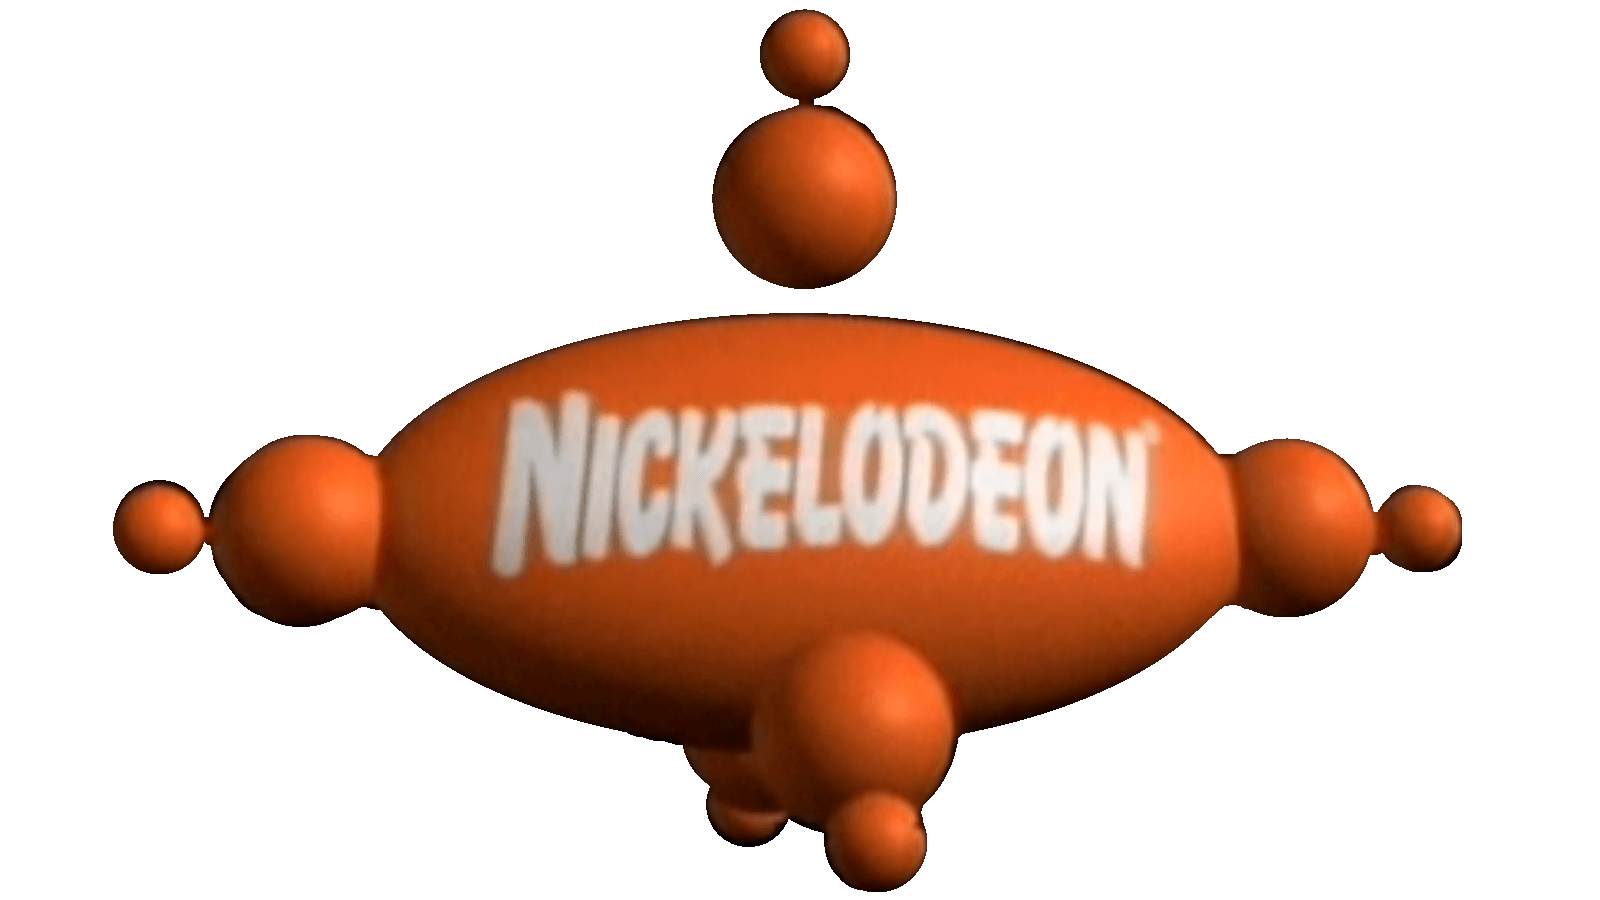 Nickelodeon Top Logo - Image - Nickelodeon Balloon.png | Logopedia | FANDOM powered by Wikia